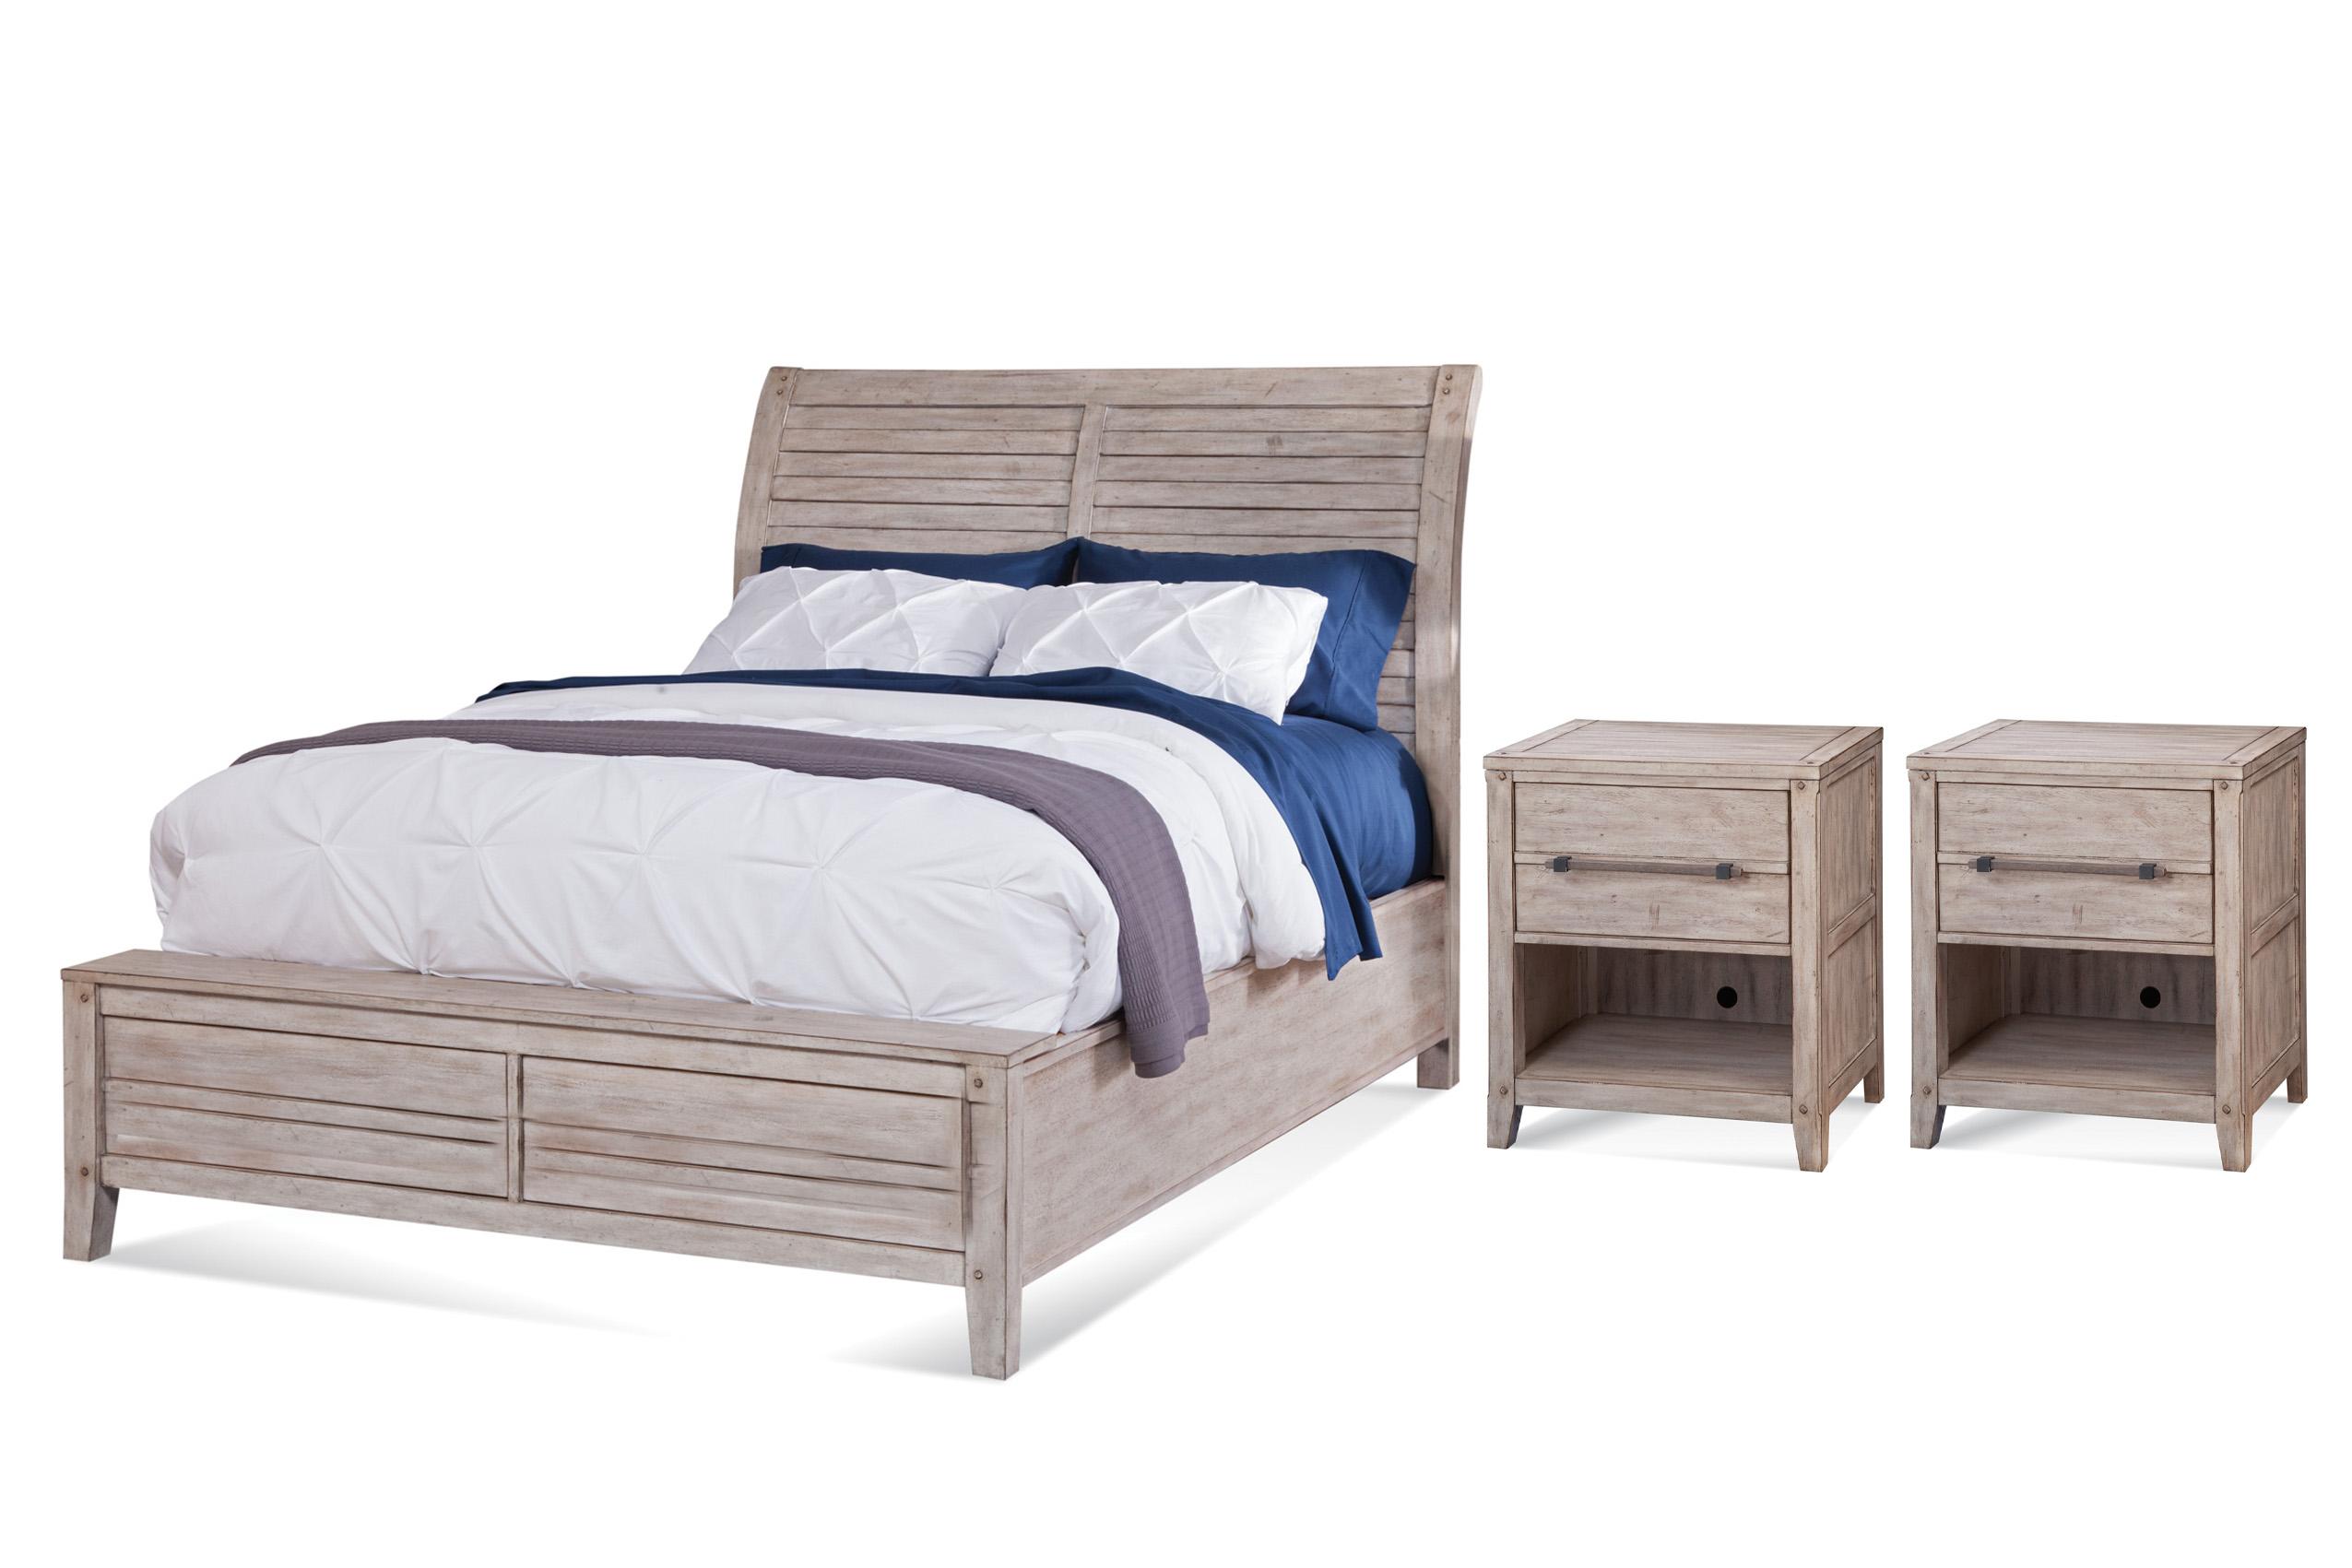 Classic, Traditional Sleigh Bedroom Set AURORA 2810-66SLP 2810-66SLPN-2N-3PC in whitewash 